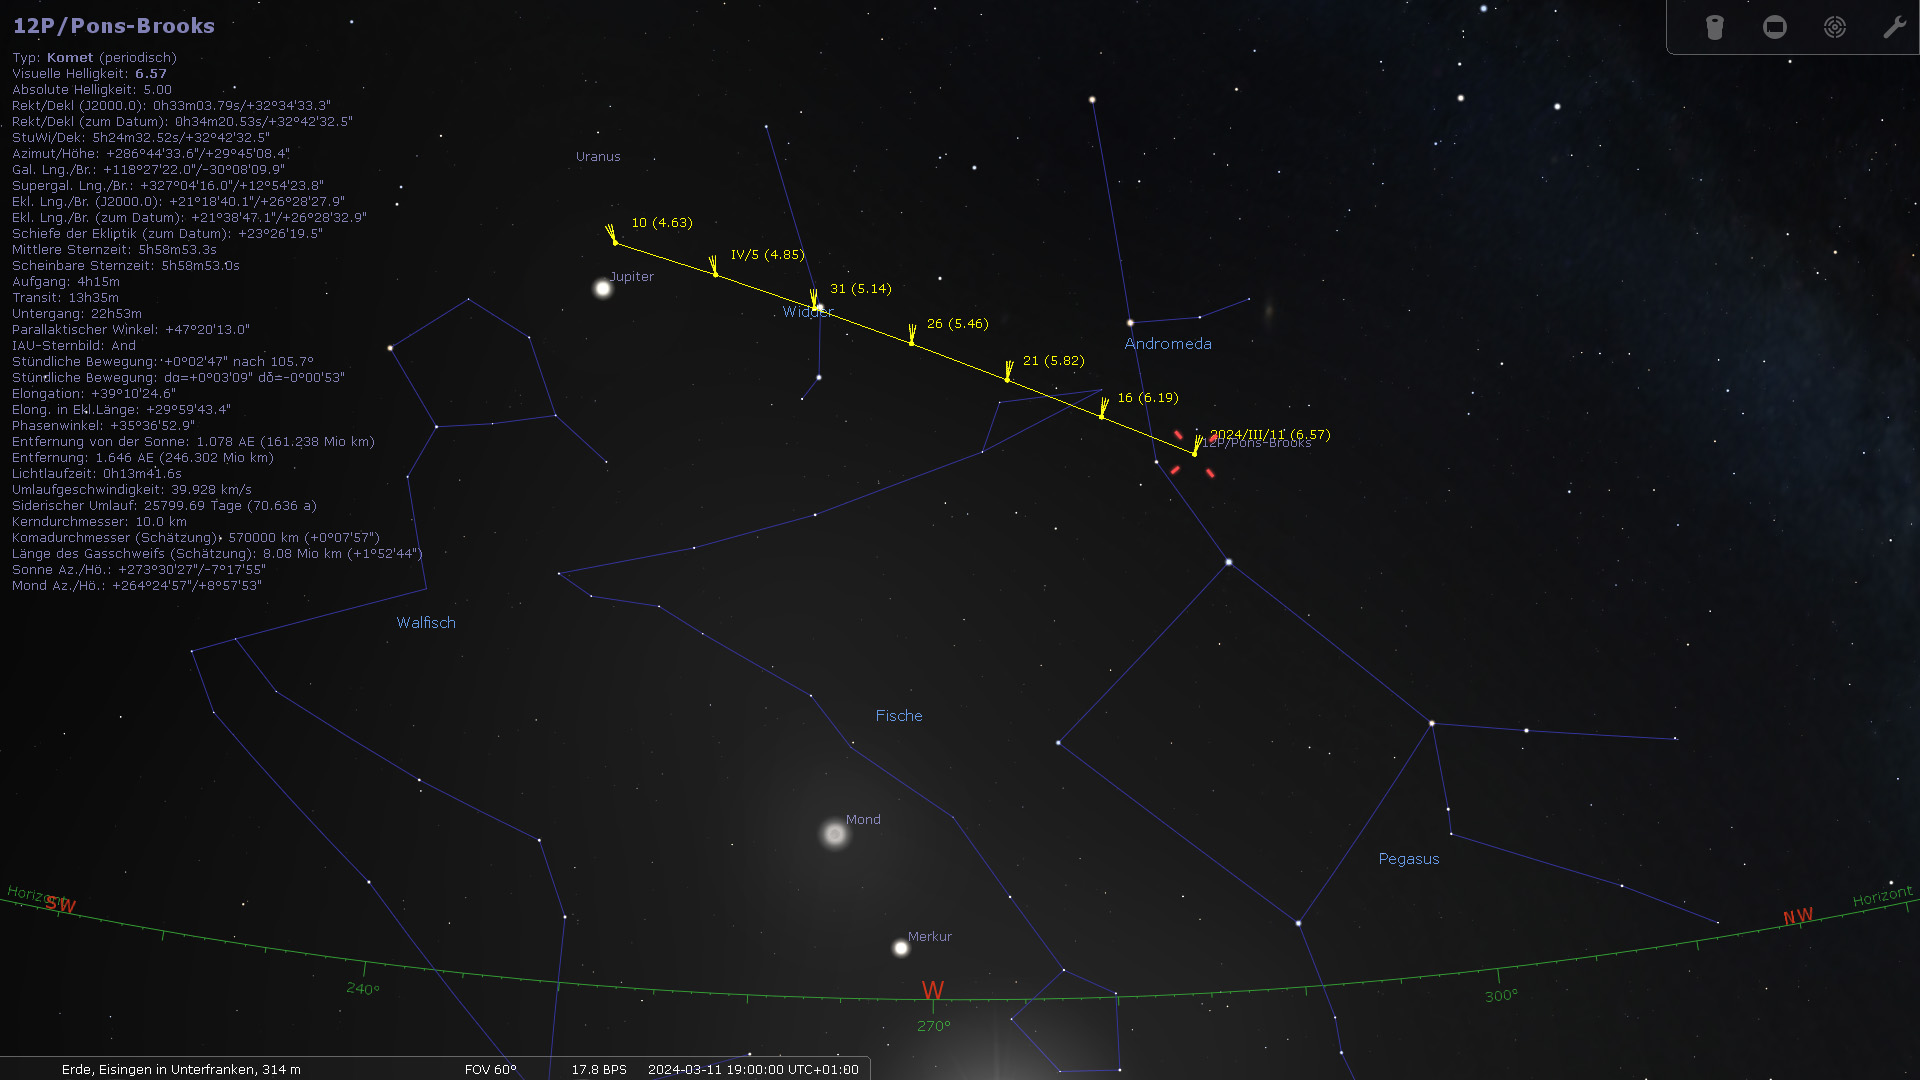 Beobachtung von Komet 12P/Pons-Brooks in Mainfranken